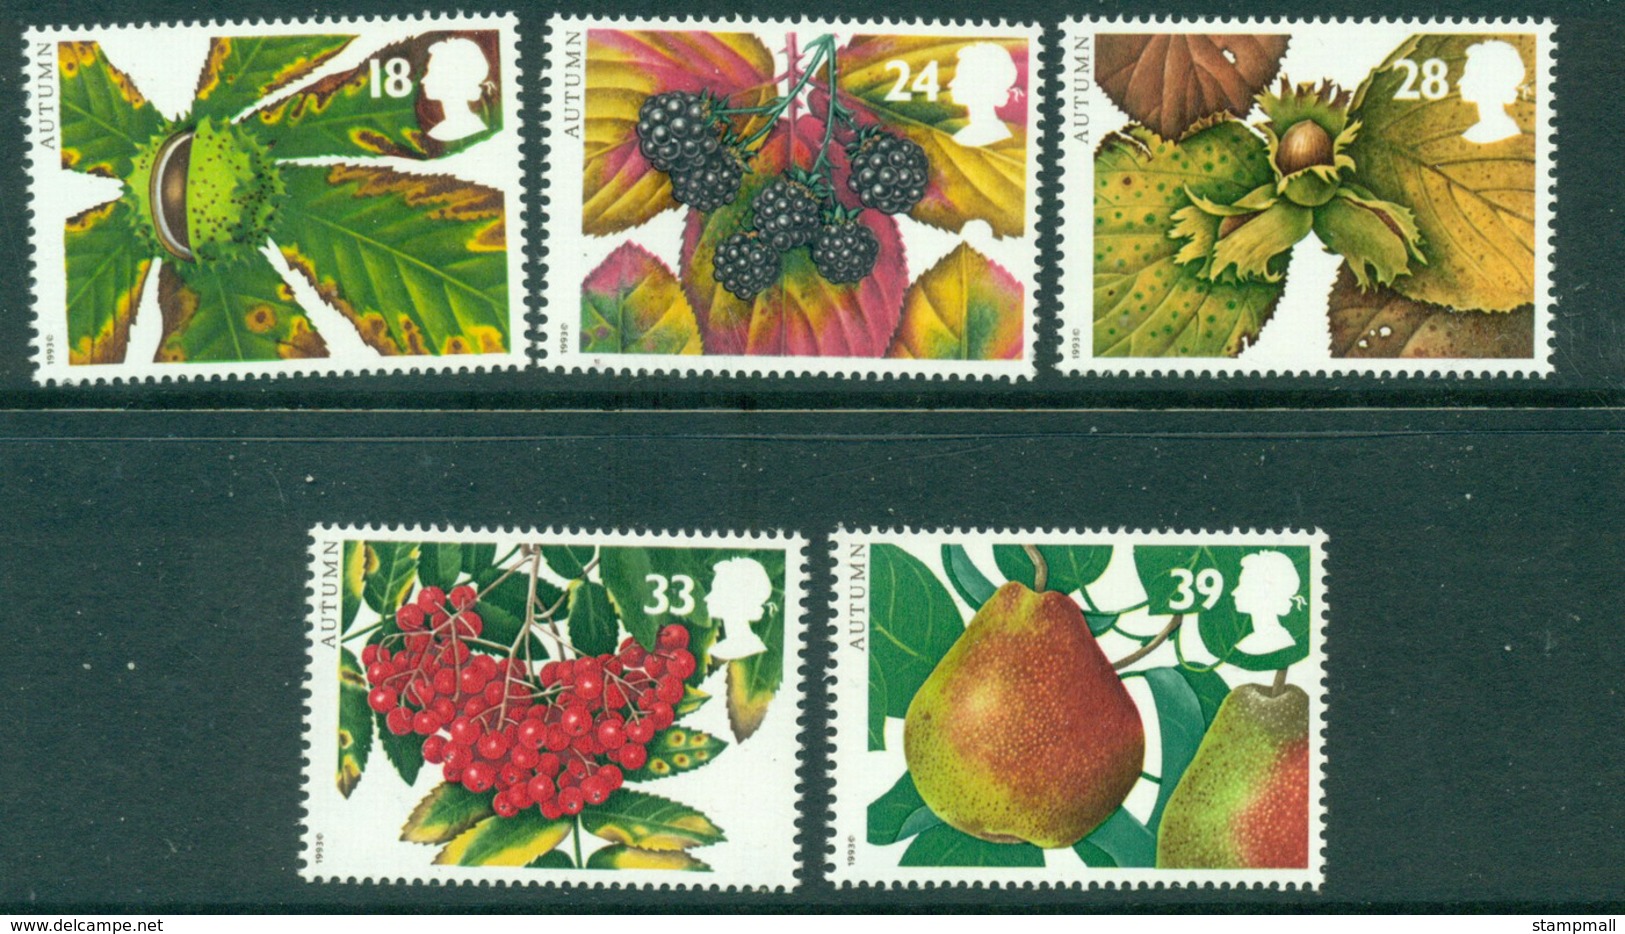 GB 1993 Autimn Fruits MUH Lot29386 - Unclassified